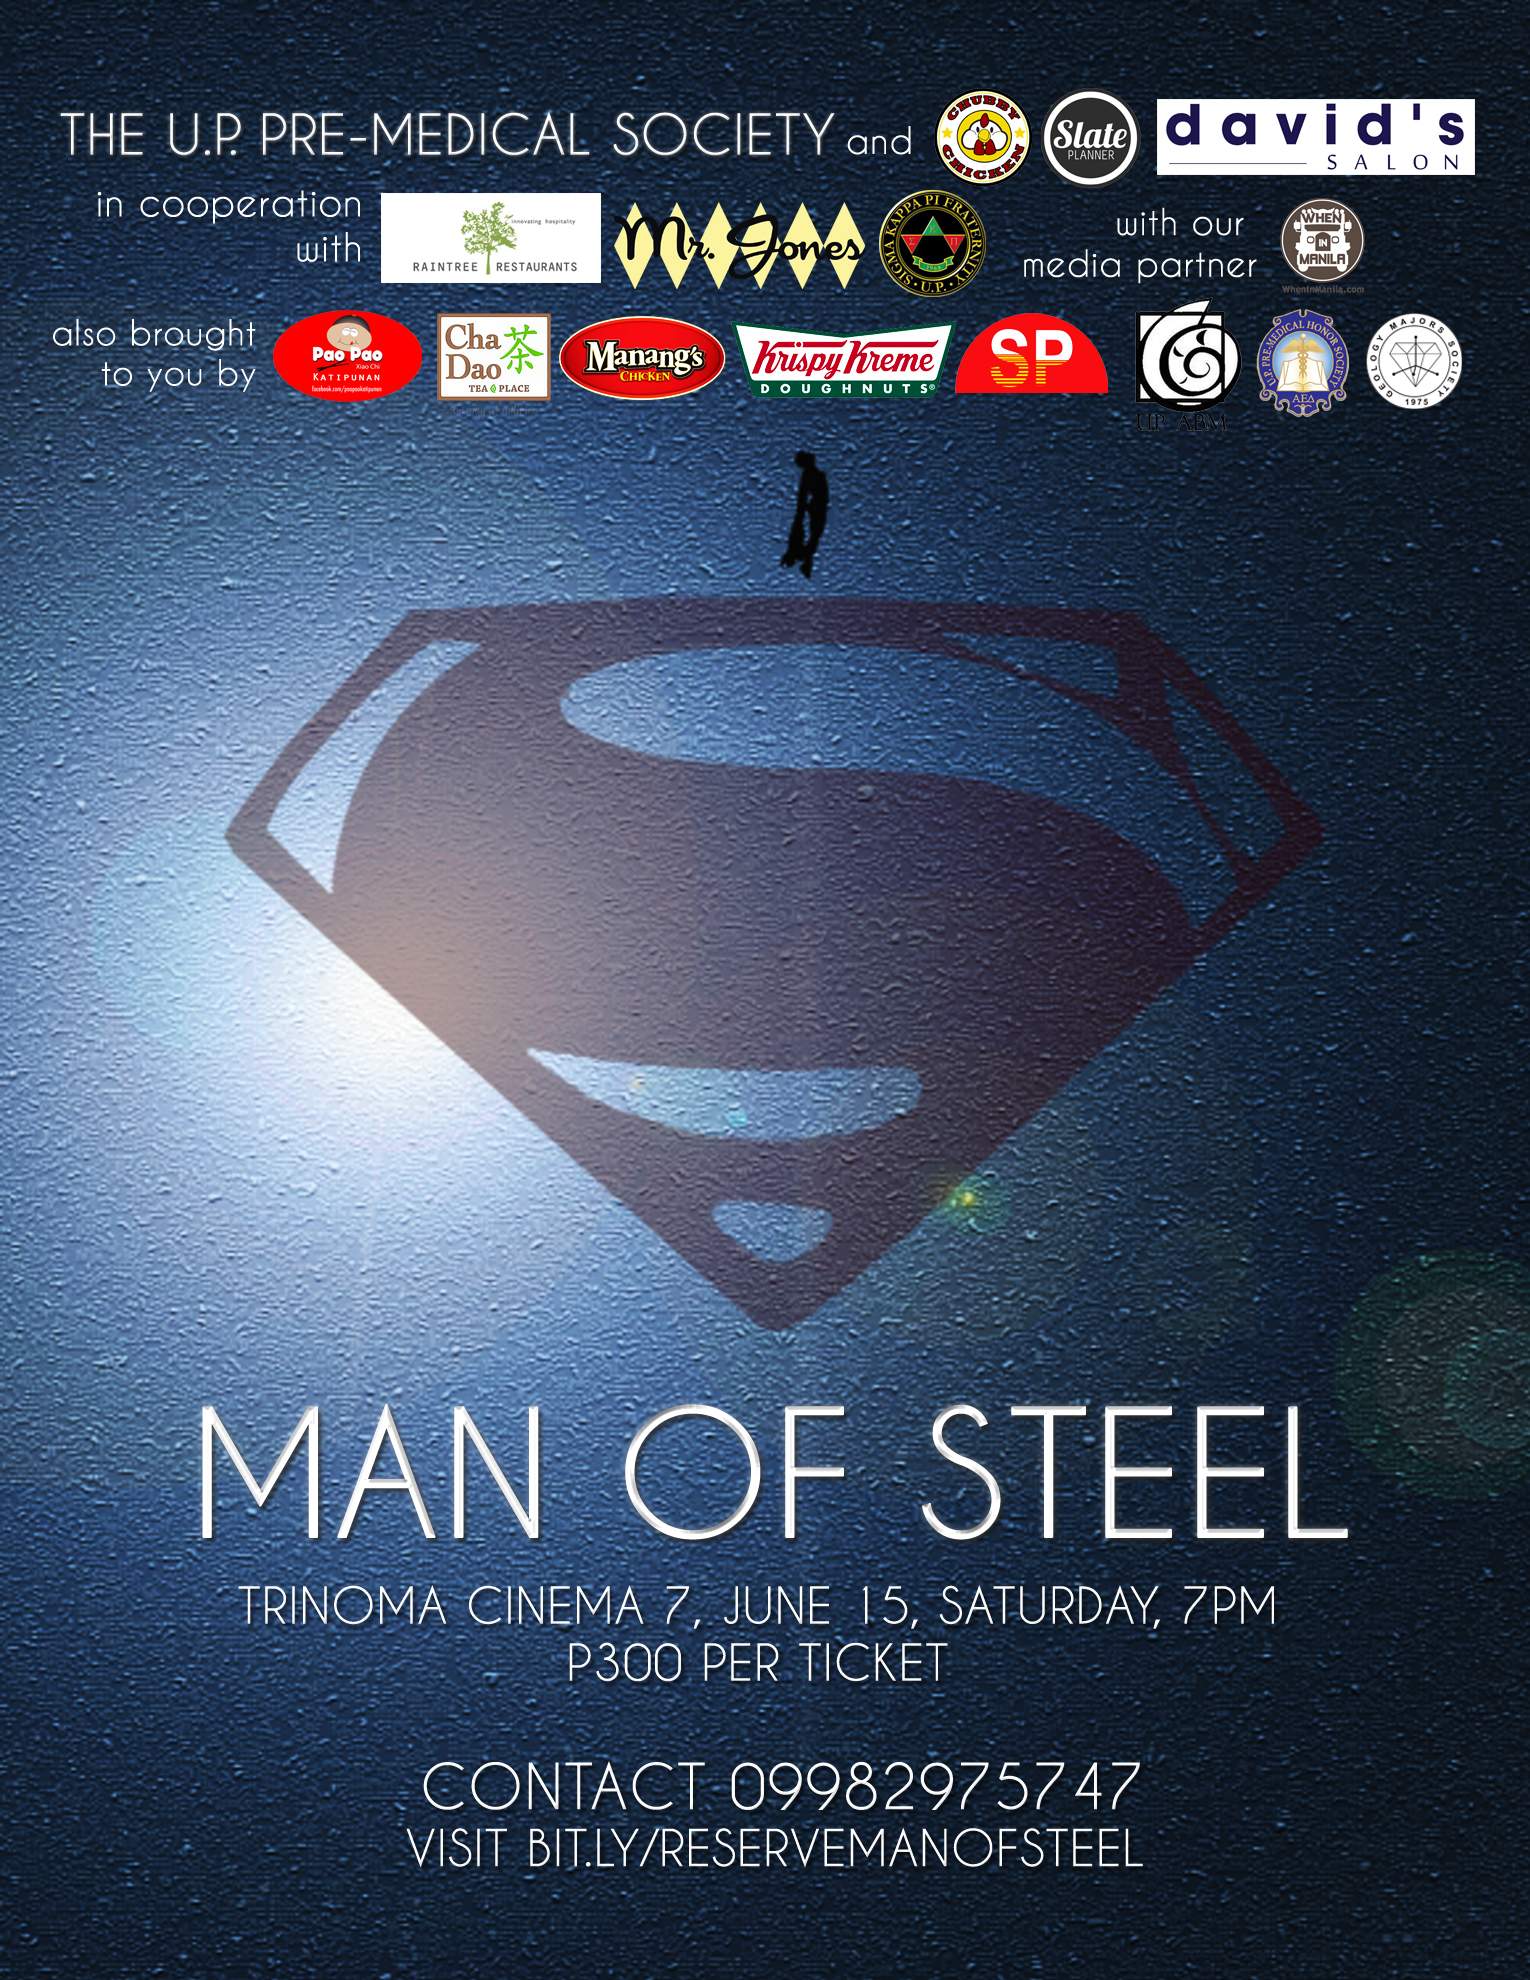 Man of Steel Poster 500kb